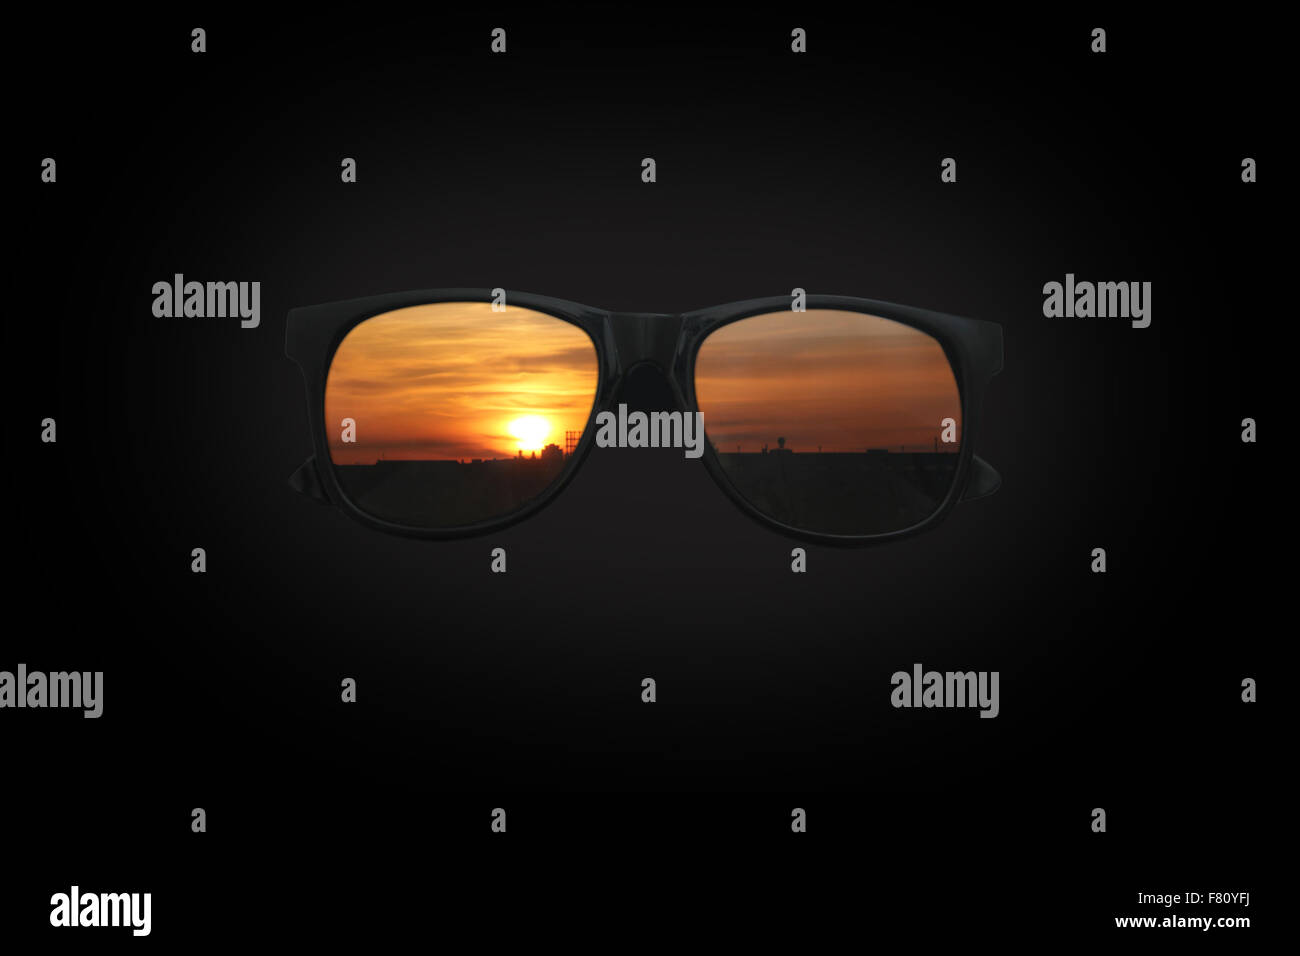 Sunglasses at Sunset on black Stock Photo